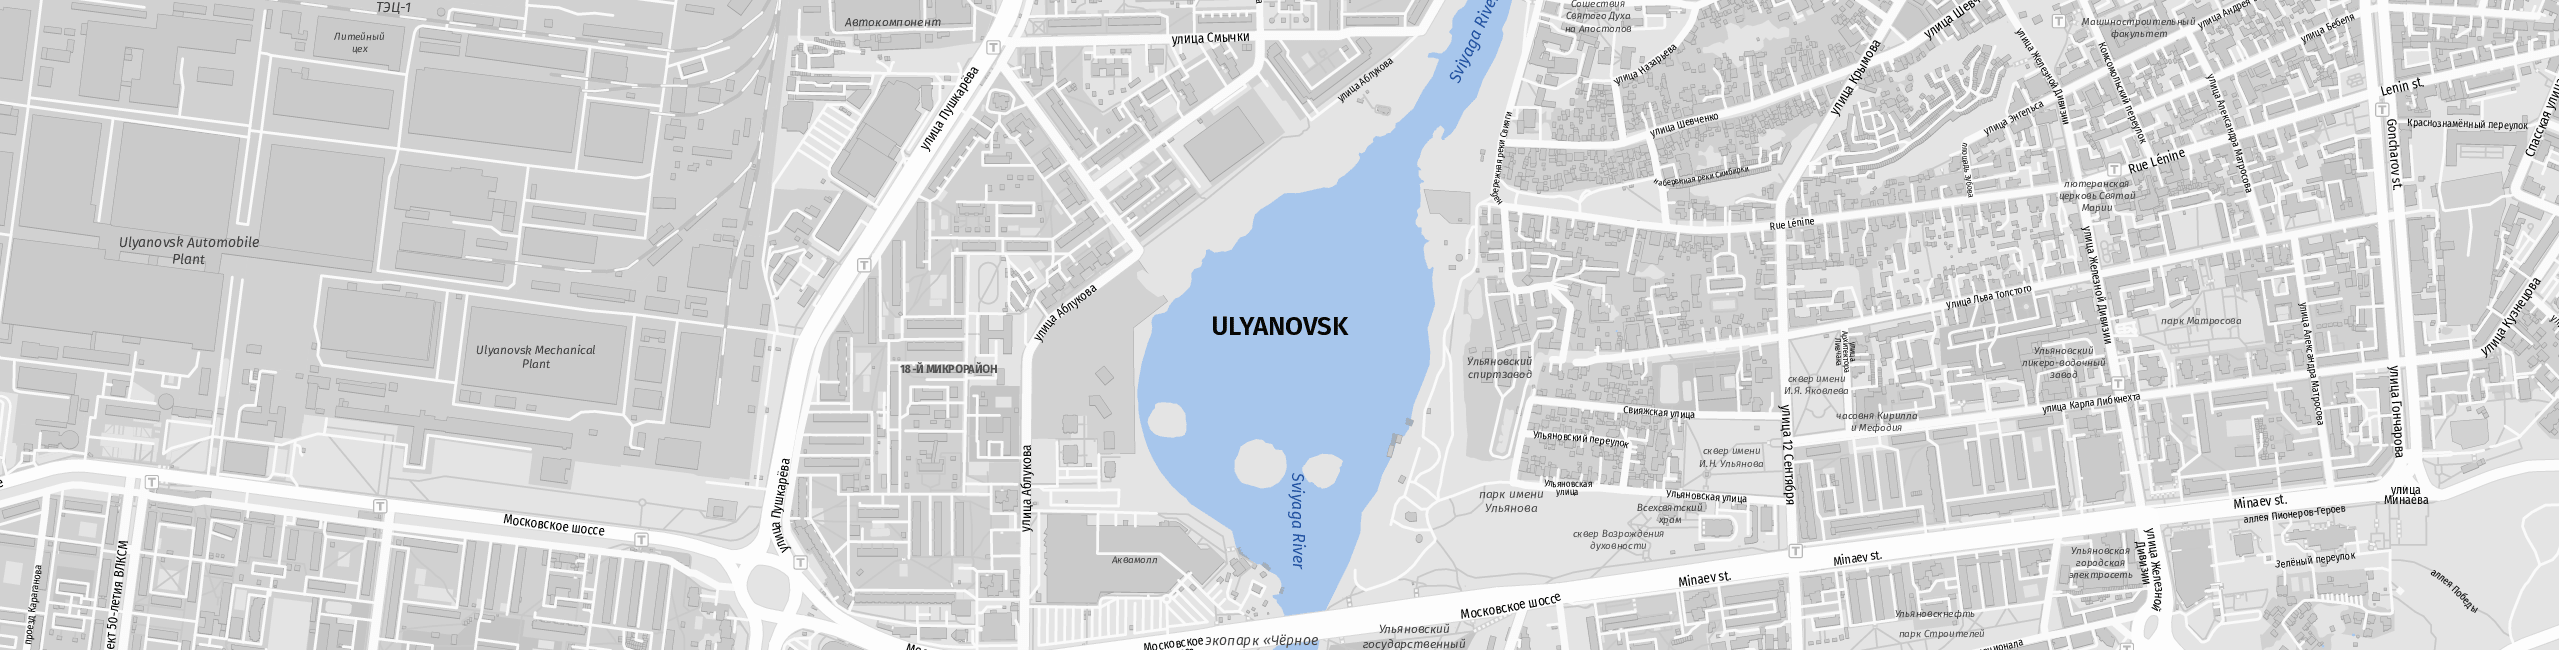 Stadtplan Ulyanovsk zum Downloaden.